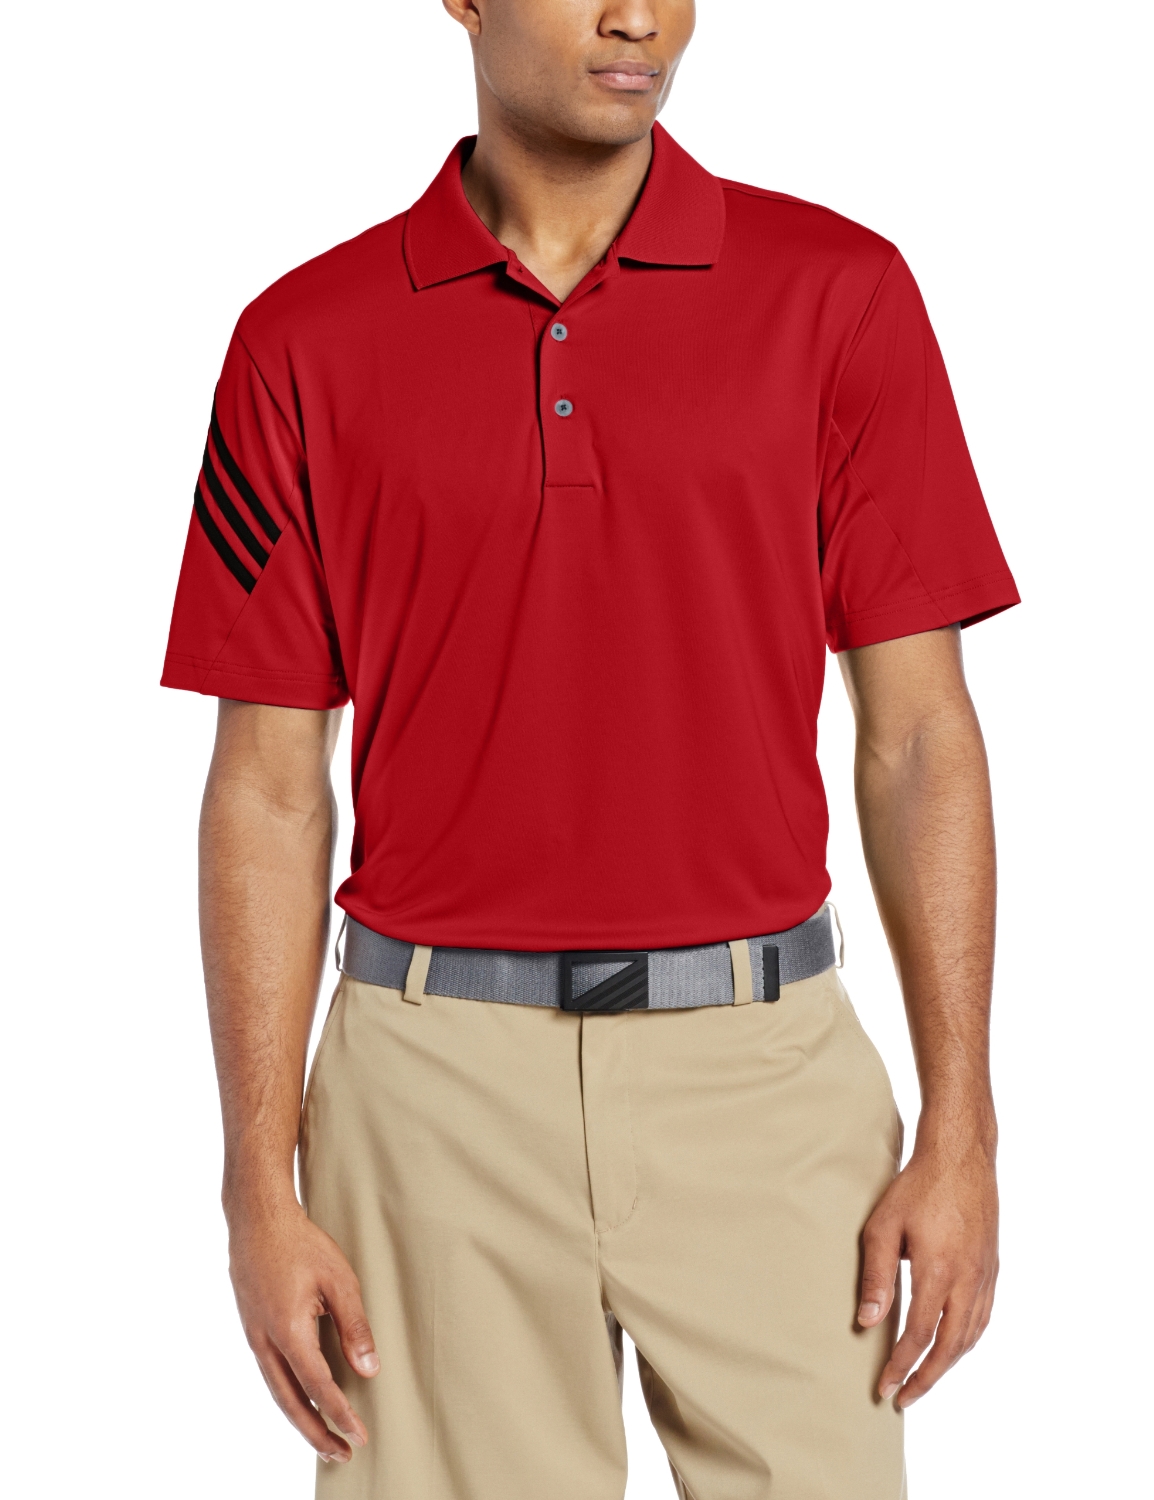 Mens Puremotion Climacool 3 Stripes Sleeve Golf Polo Shirts